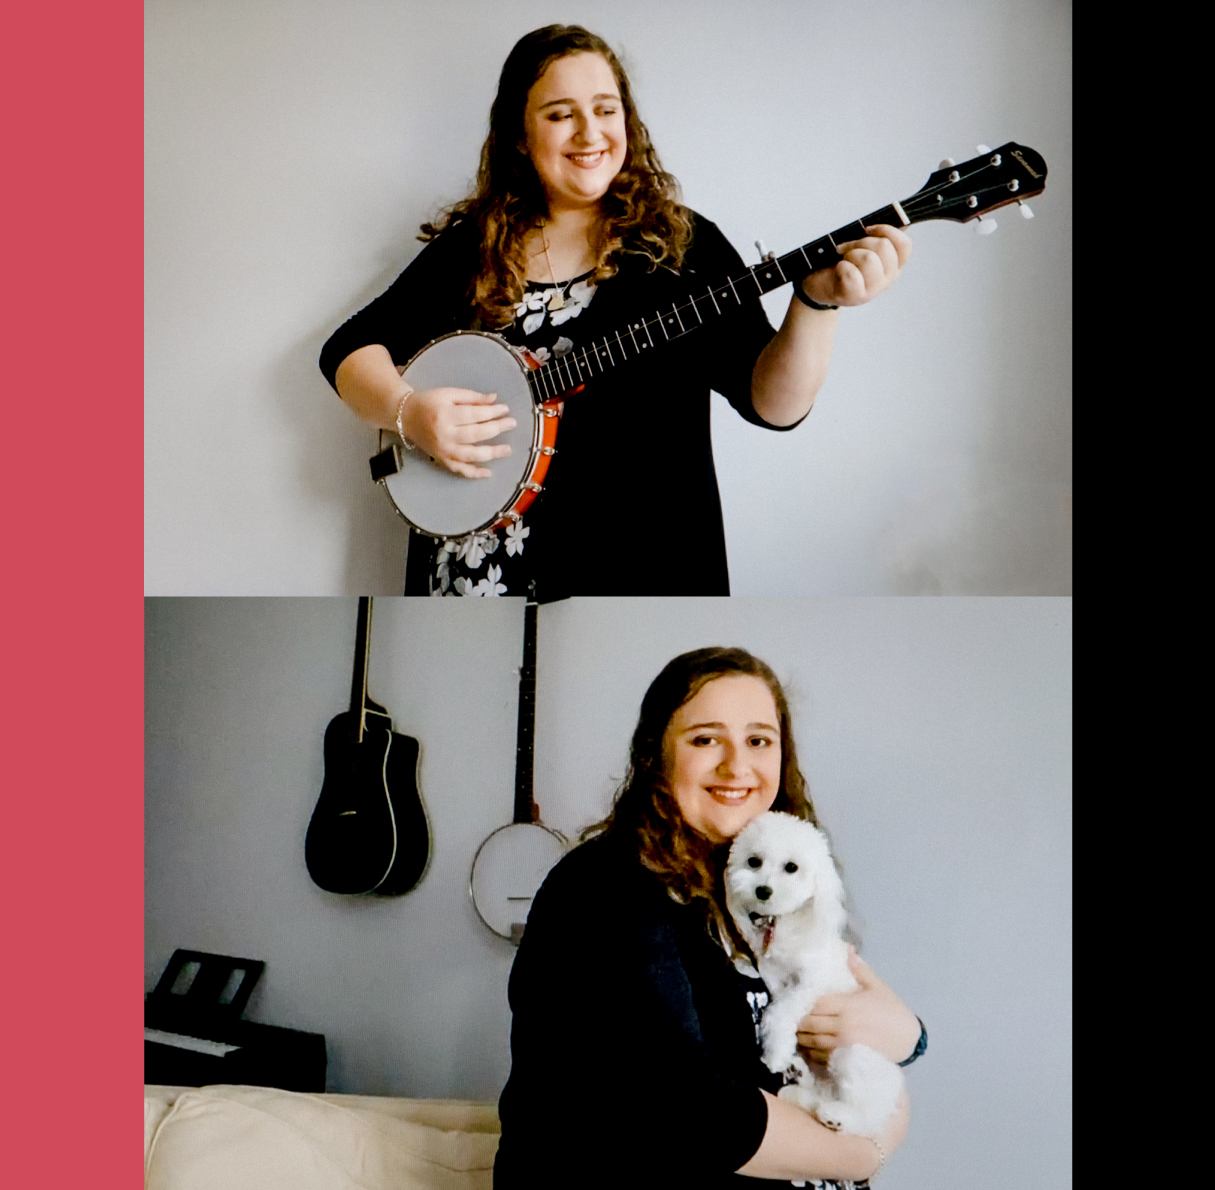 Top: Liv playing a banjo. Bottom: Liv holding her dog.